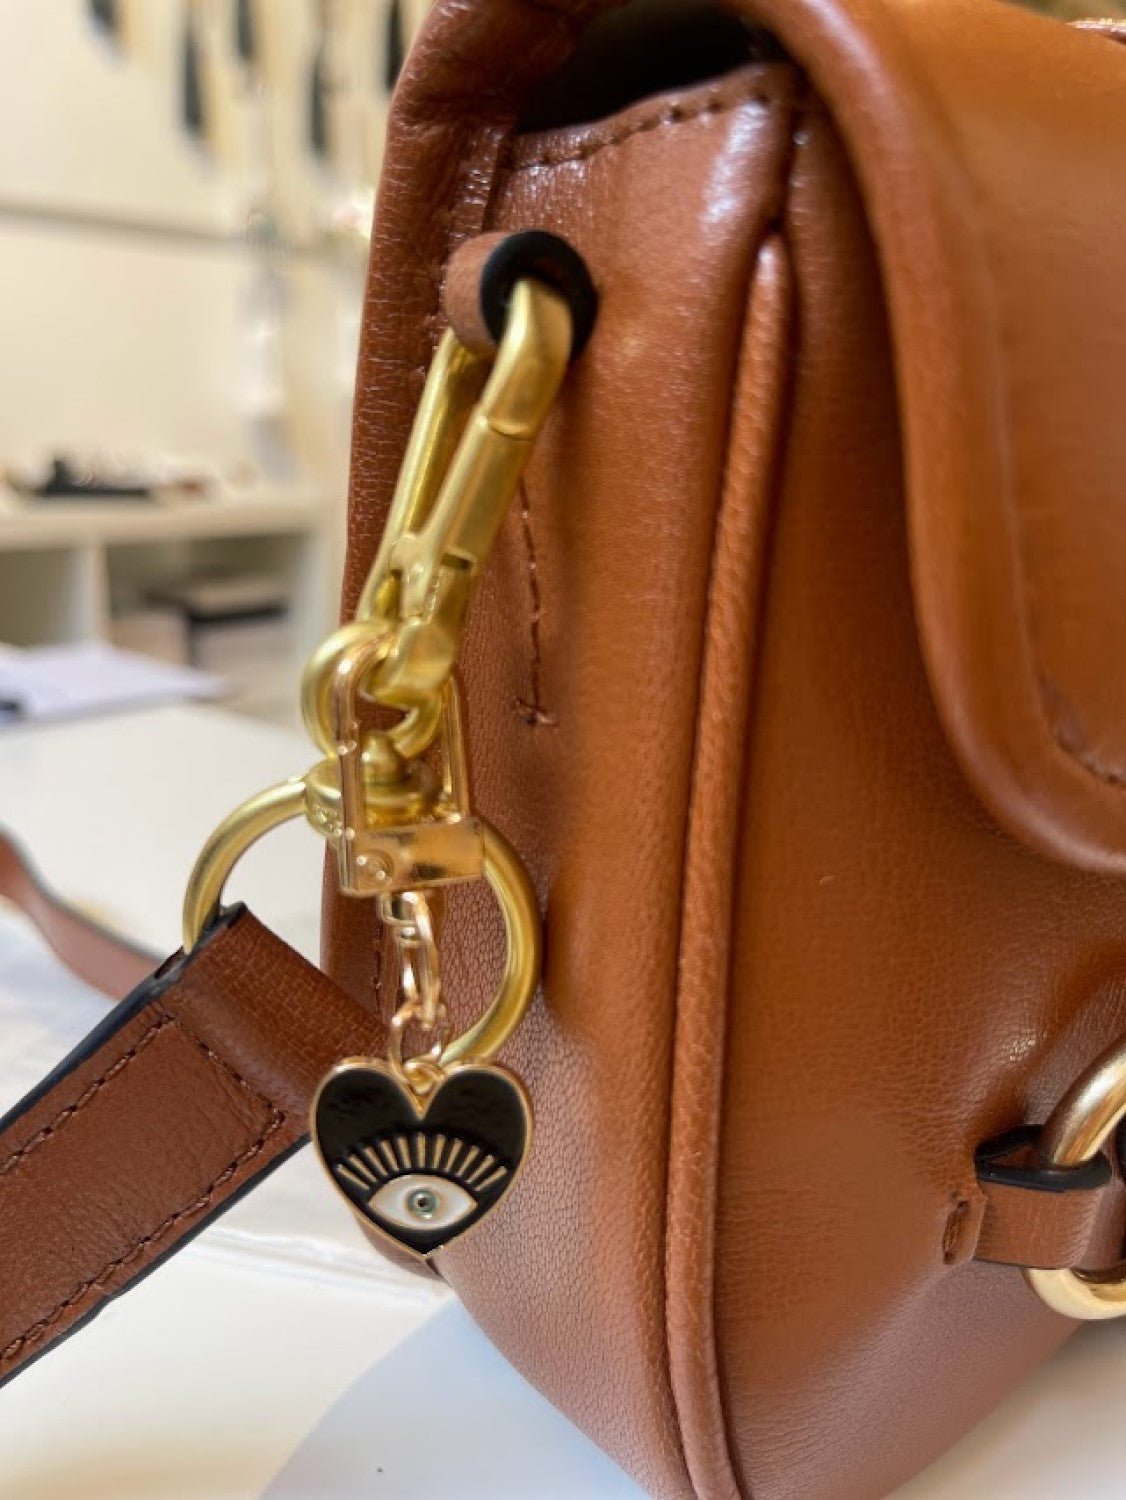 Bag charm evil eye heart - Stylish Luck Home Decor | Hamsa \ Hand Of Fatima | Good Luck Gifts  Keychains for Women Bag Charms Key Chains Car Key Pendant for Purse Handbag Bag Decoration